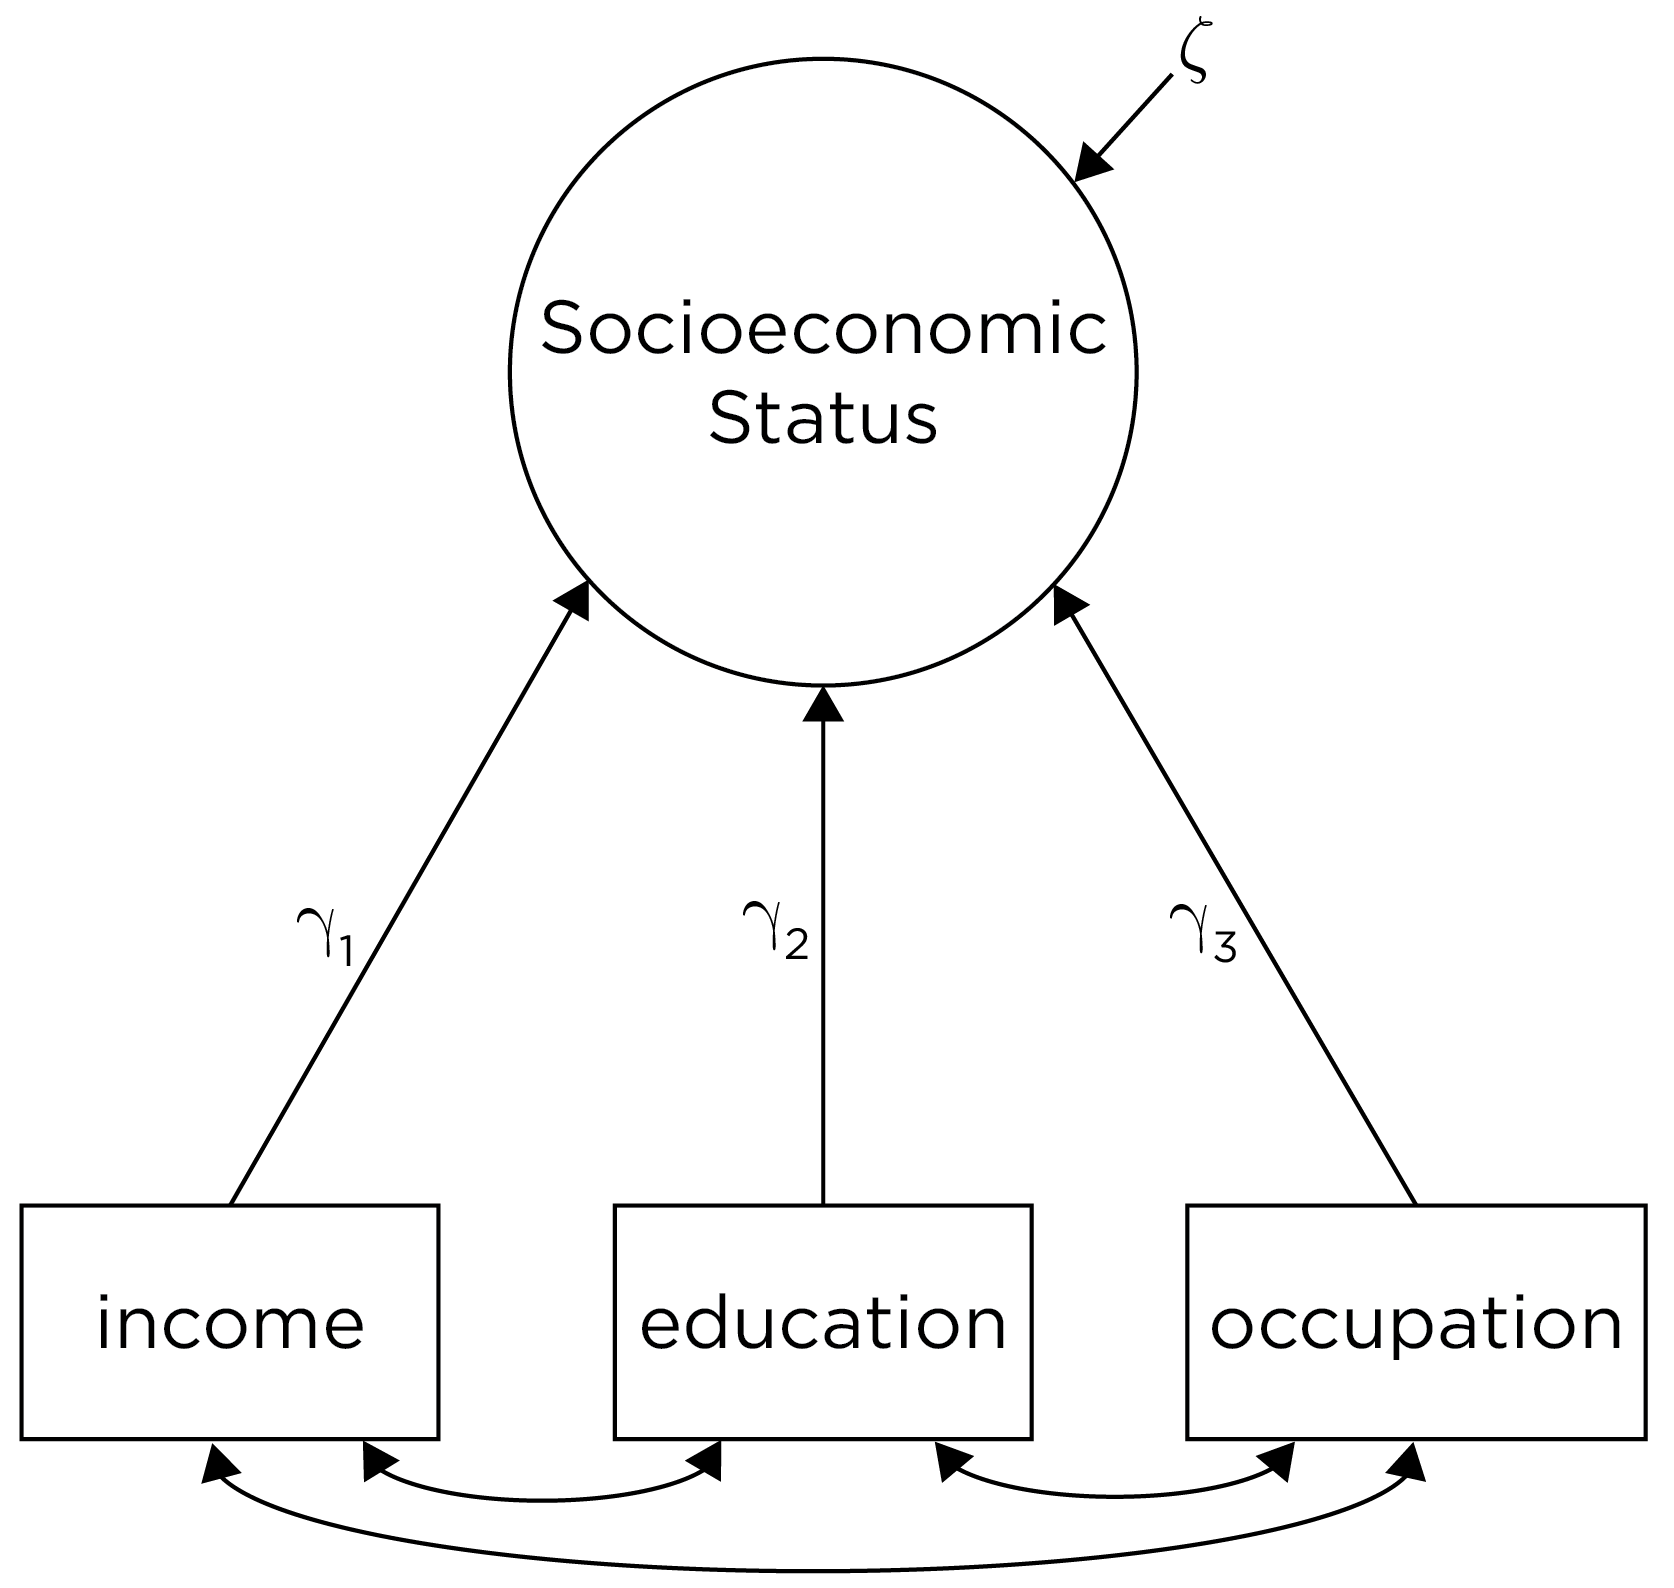 Socioeconomic Status as a Formative Construct.